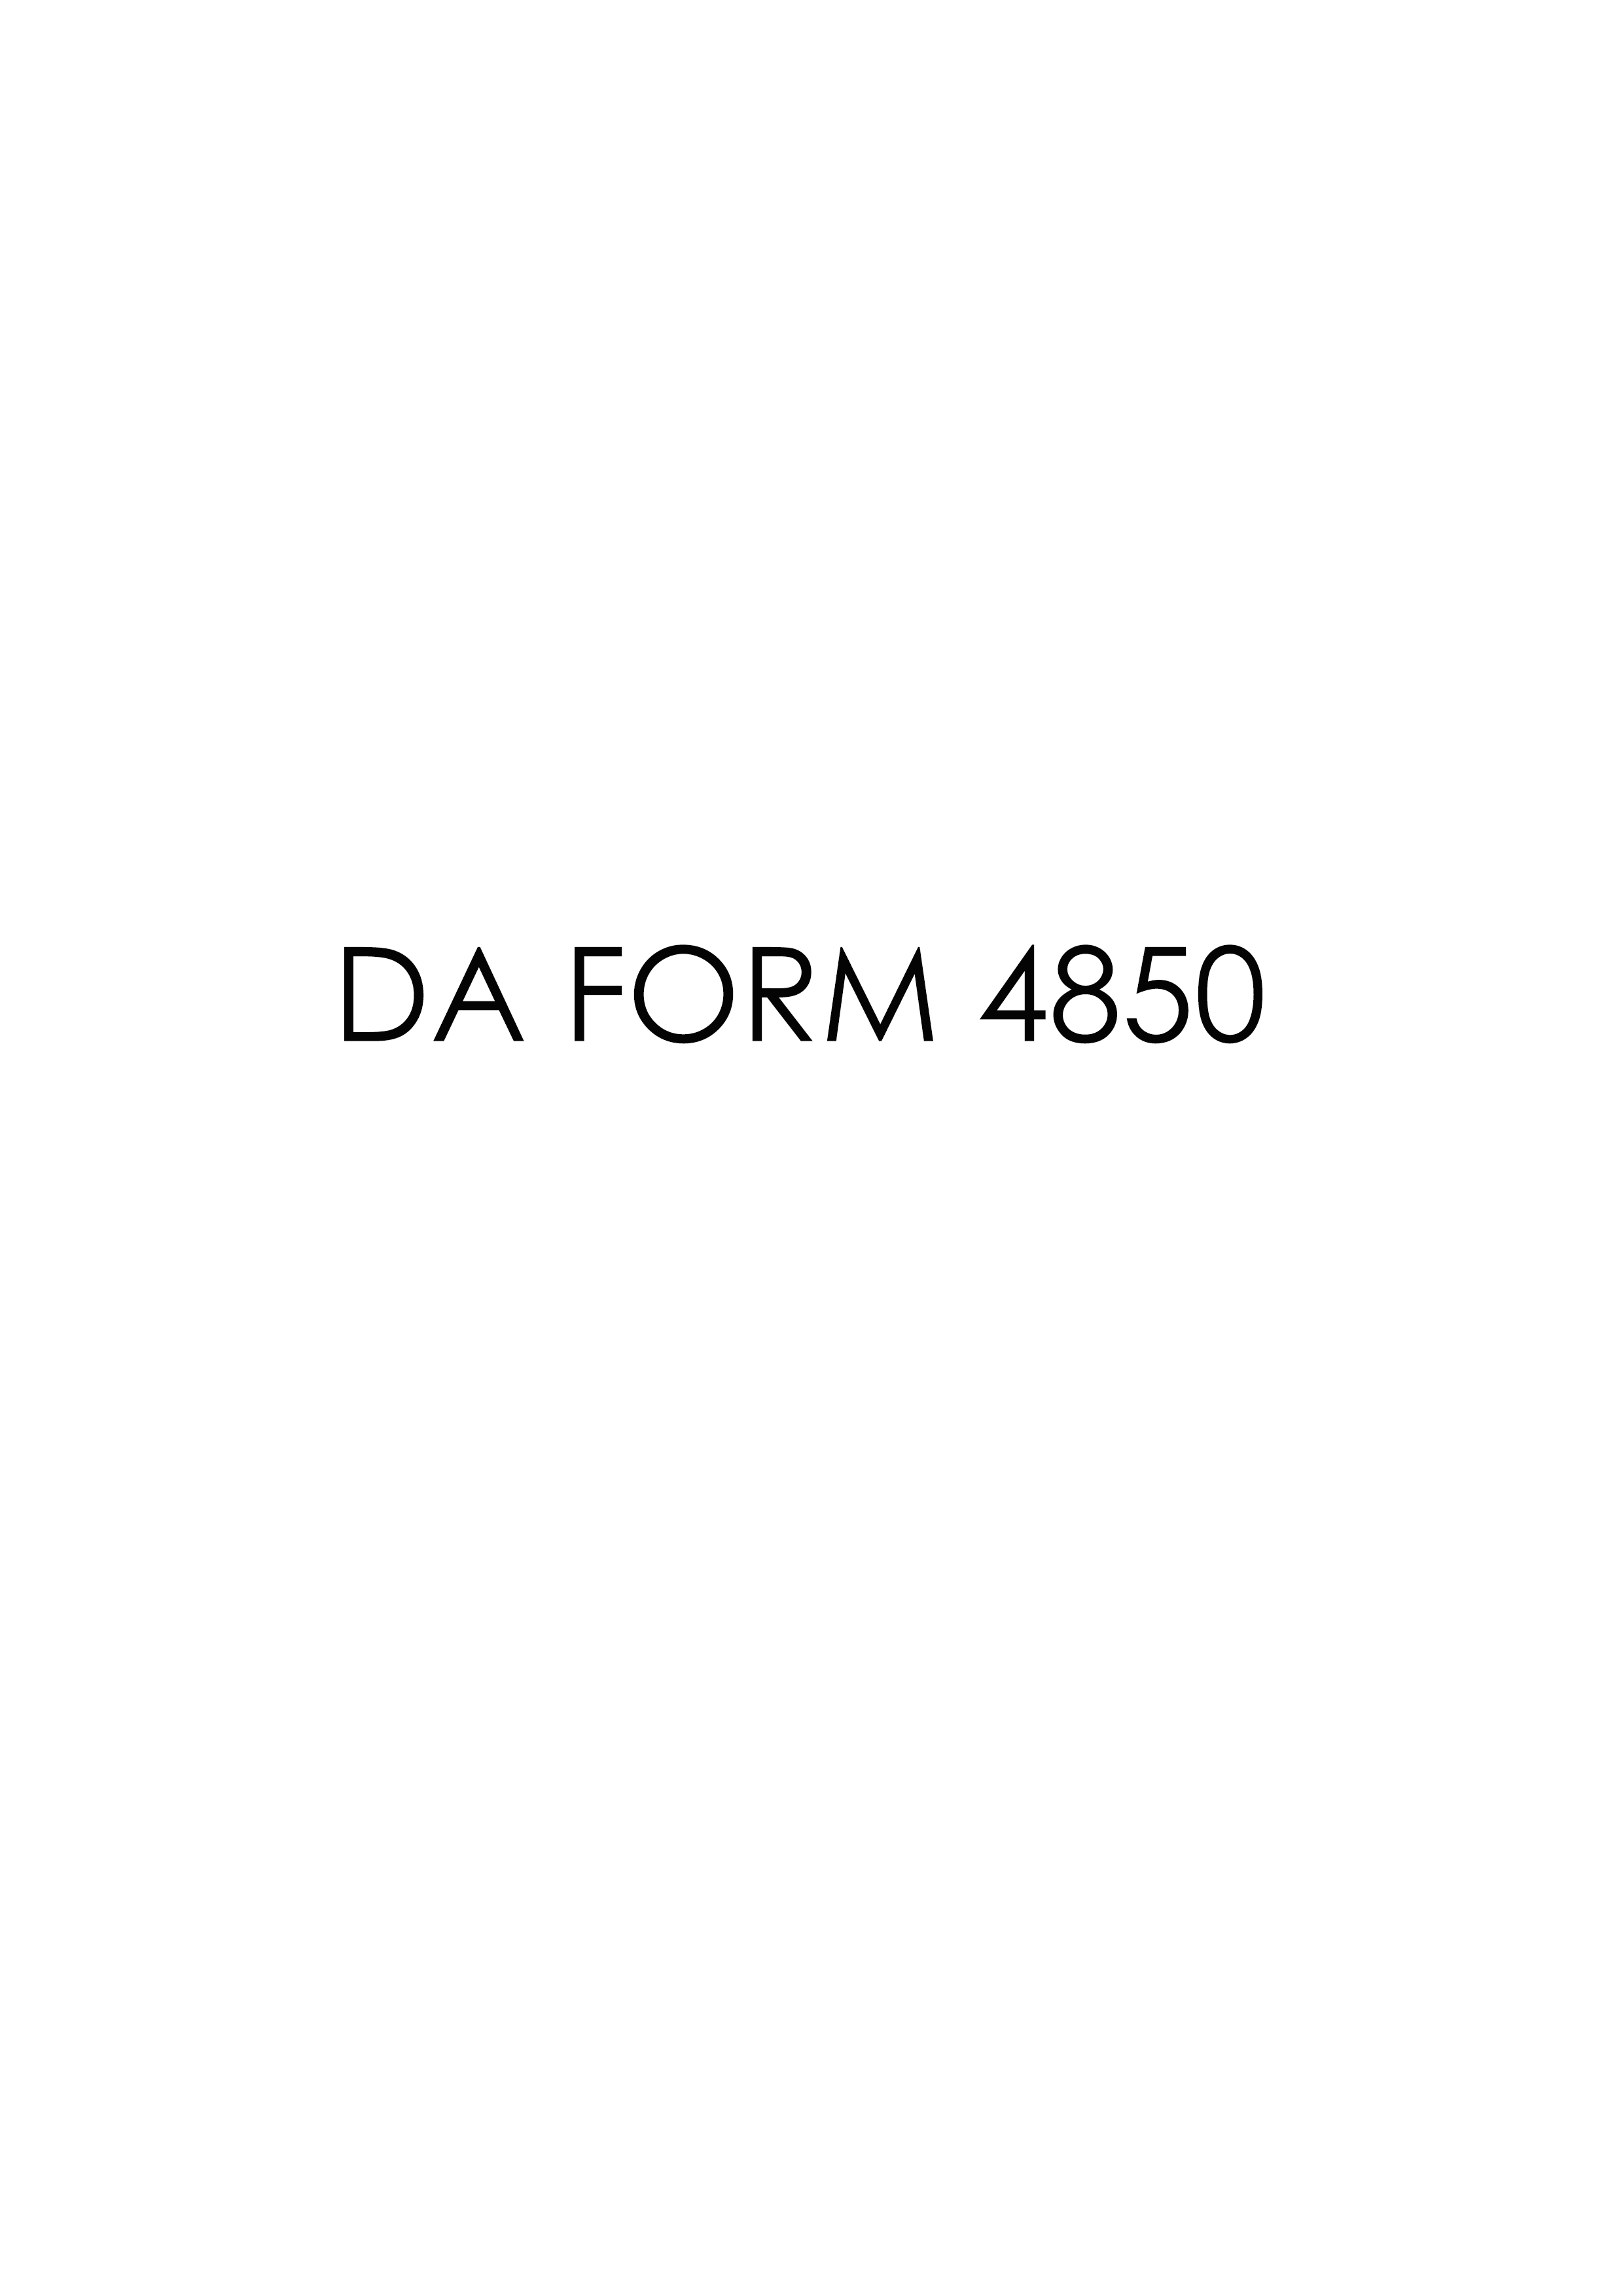 da Form 4850 fillable